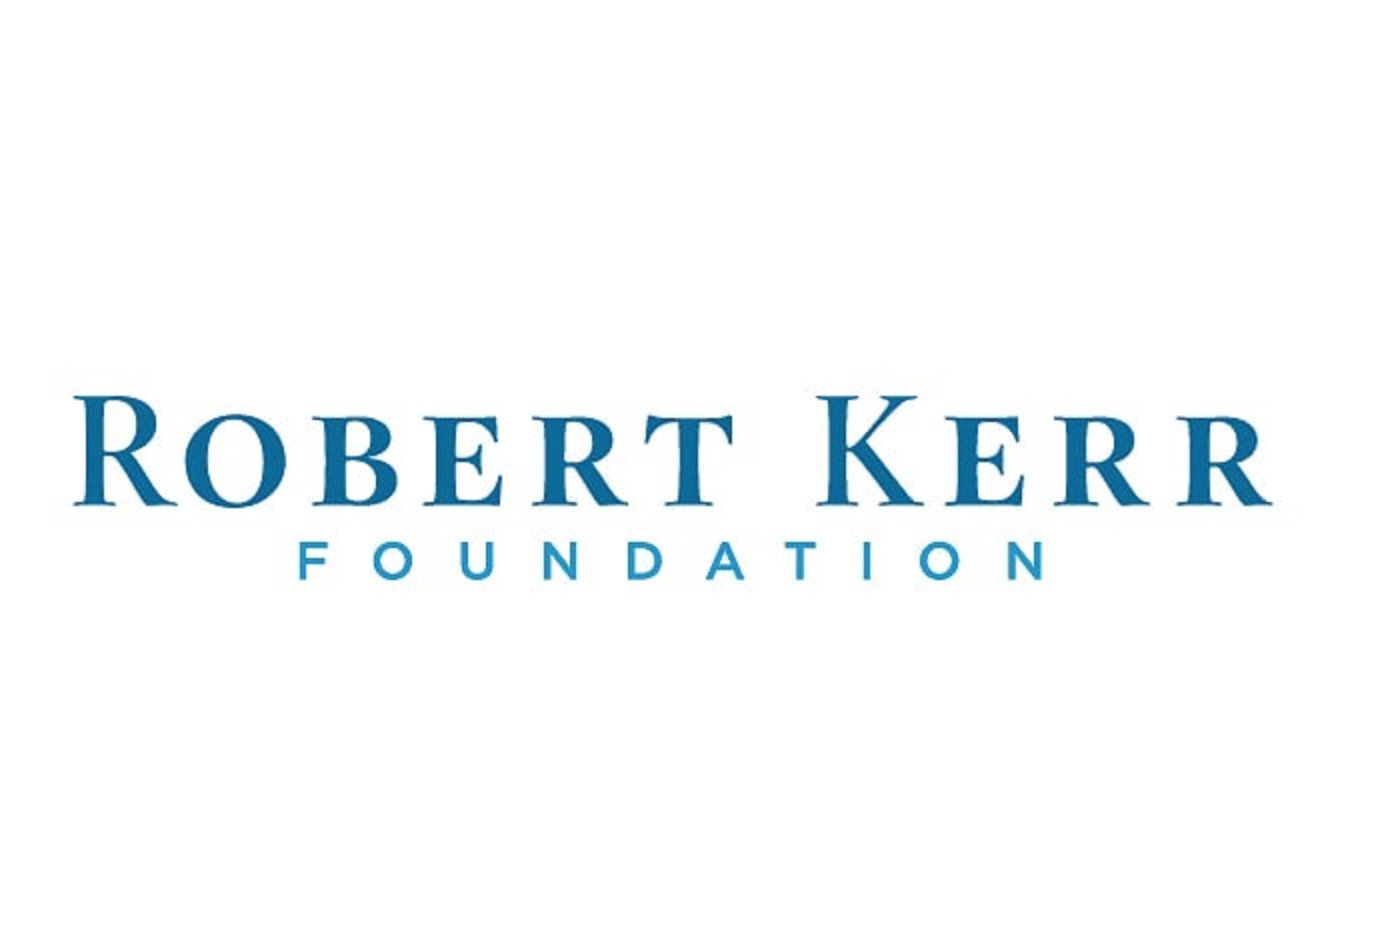 The Robert Kerr Foundation